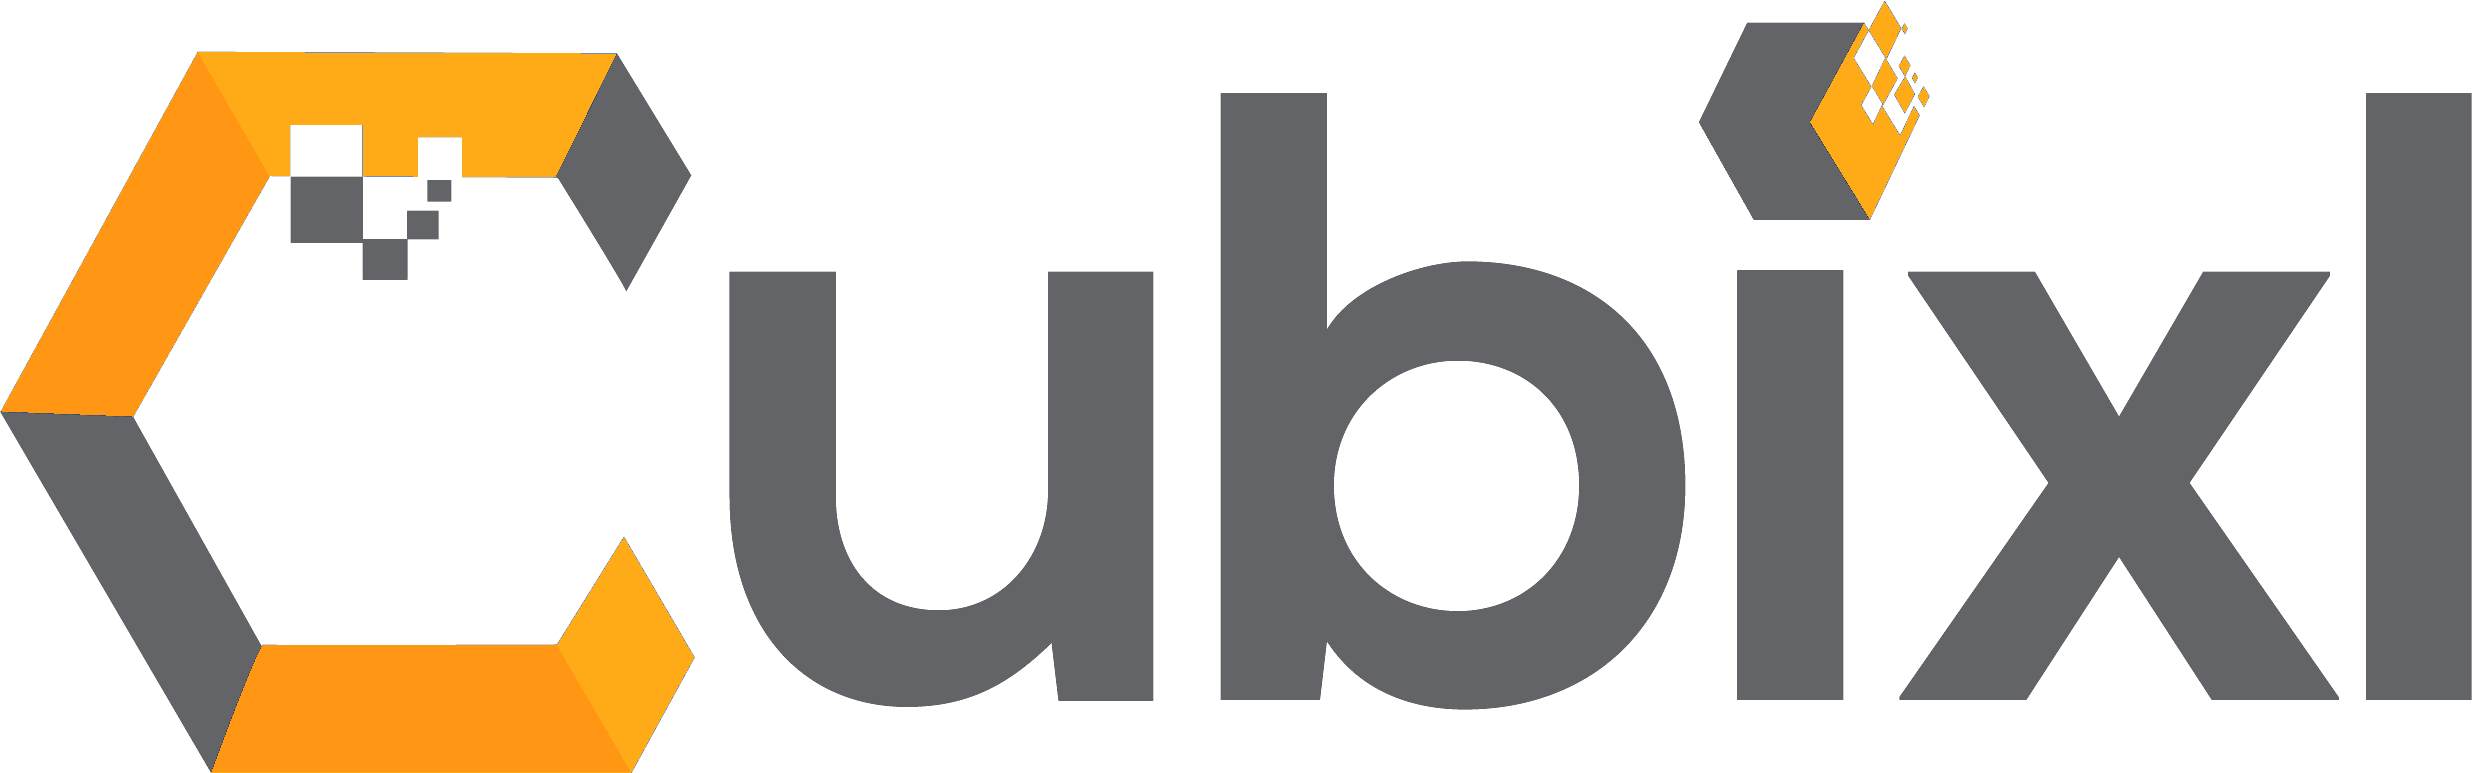 Cubixl Inc - Digital Design and Development Agency